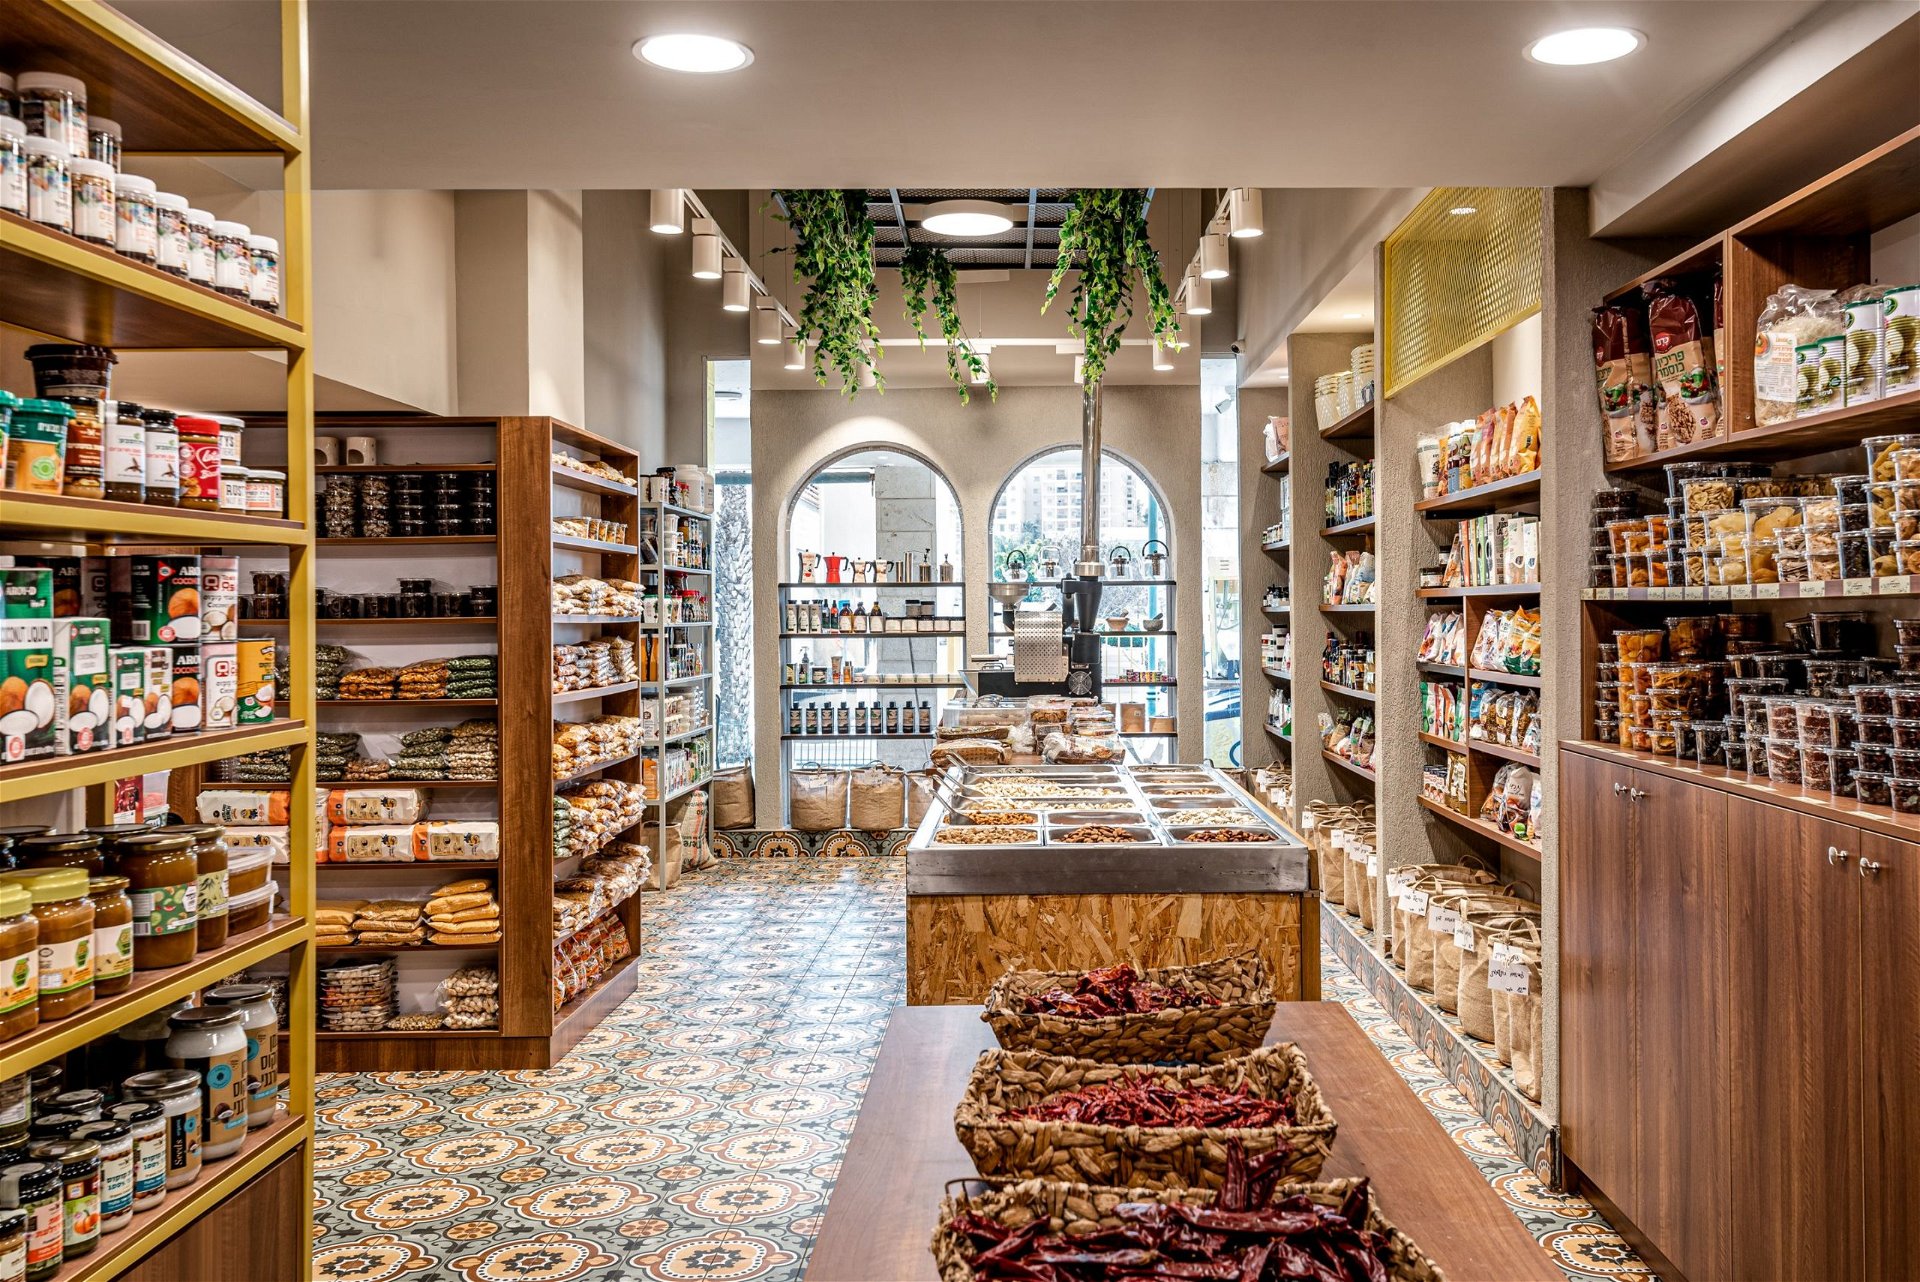 The Spice Store, Gedera - Retail Store/Shop Interior Design on Love That  Design